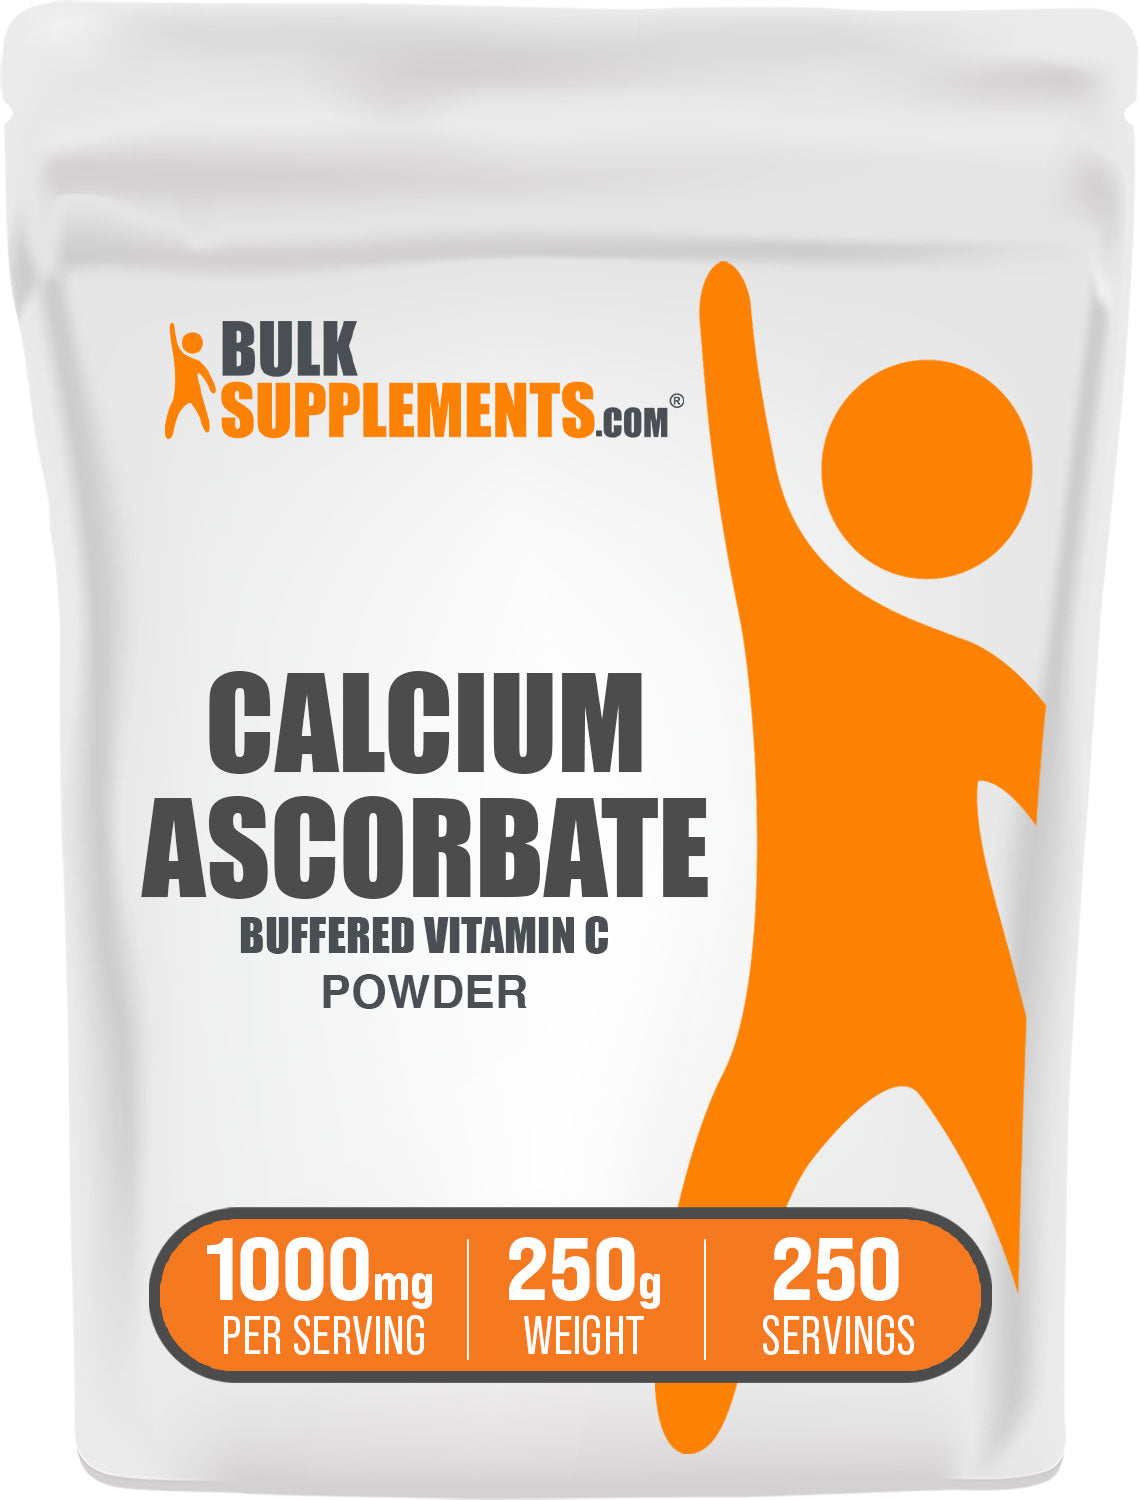 BulkSupplements.com Calcium Ascorbate 250g bag